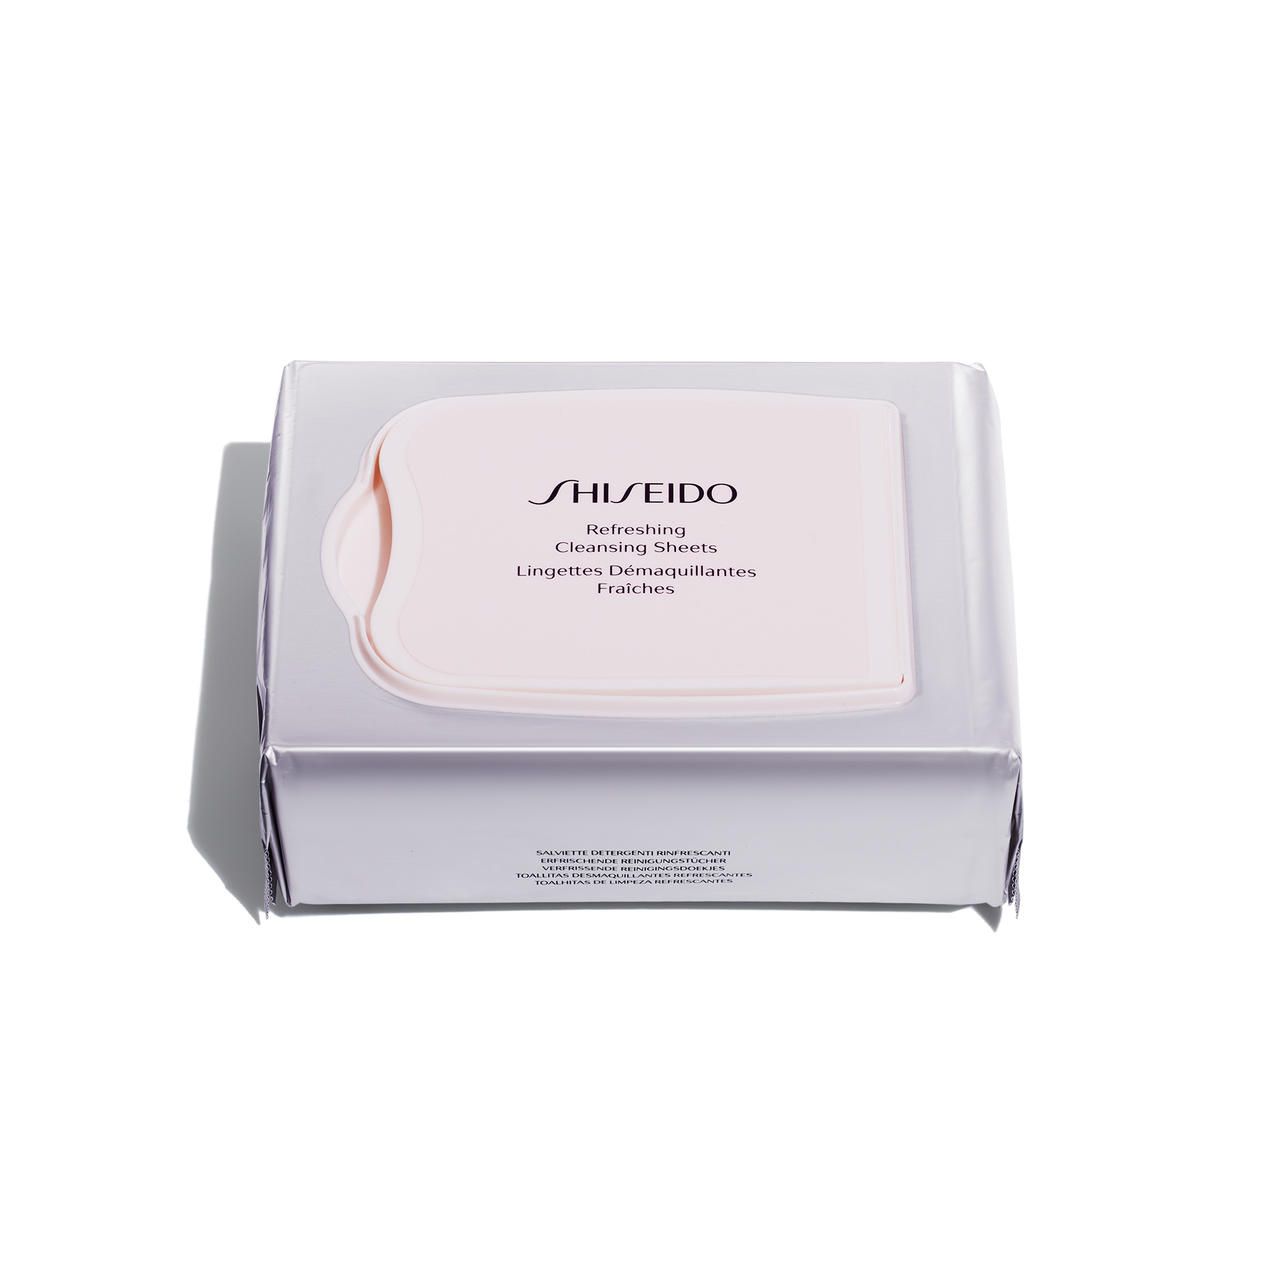 Shiseido, Generic Skincare Refreshing Cleansing Sheets